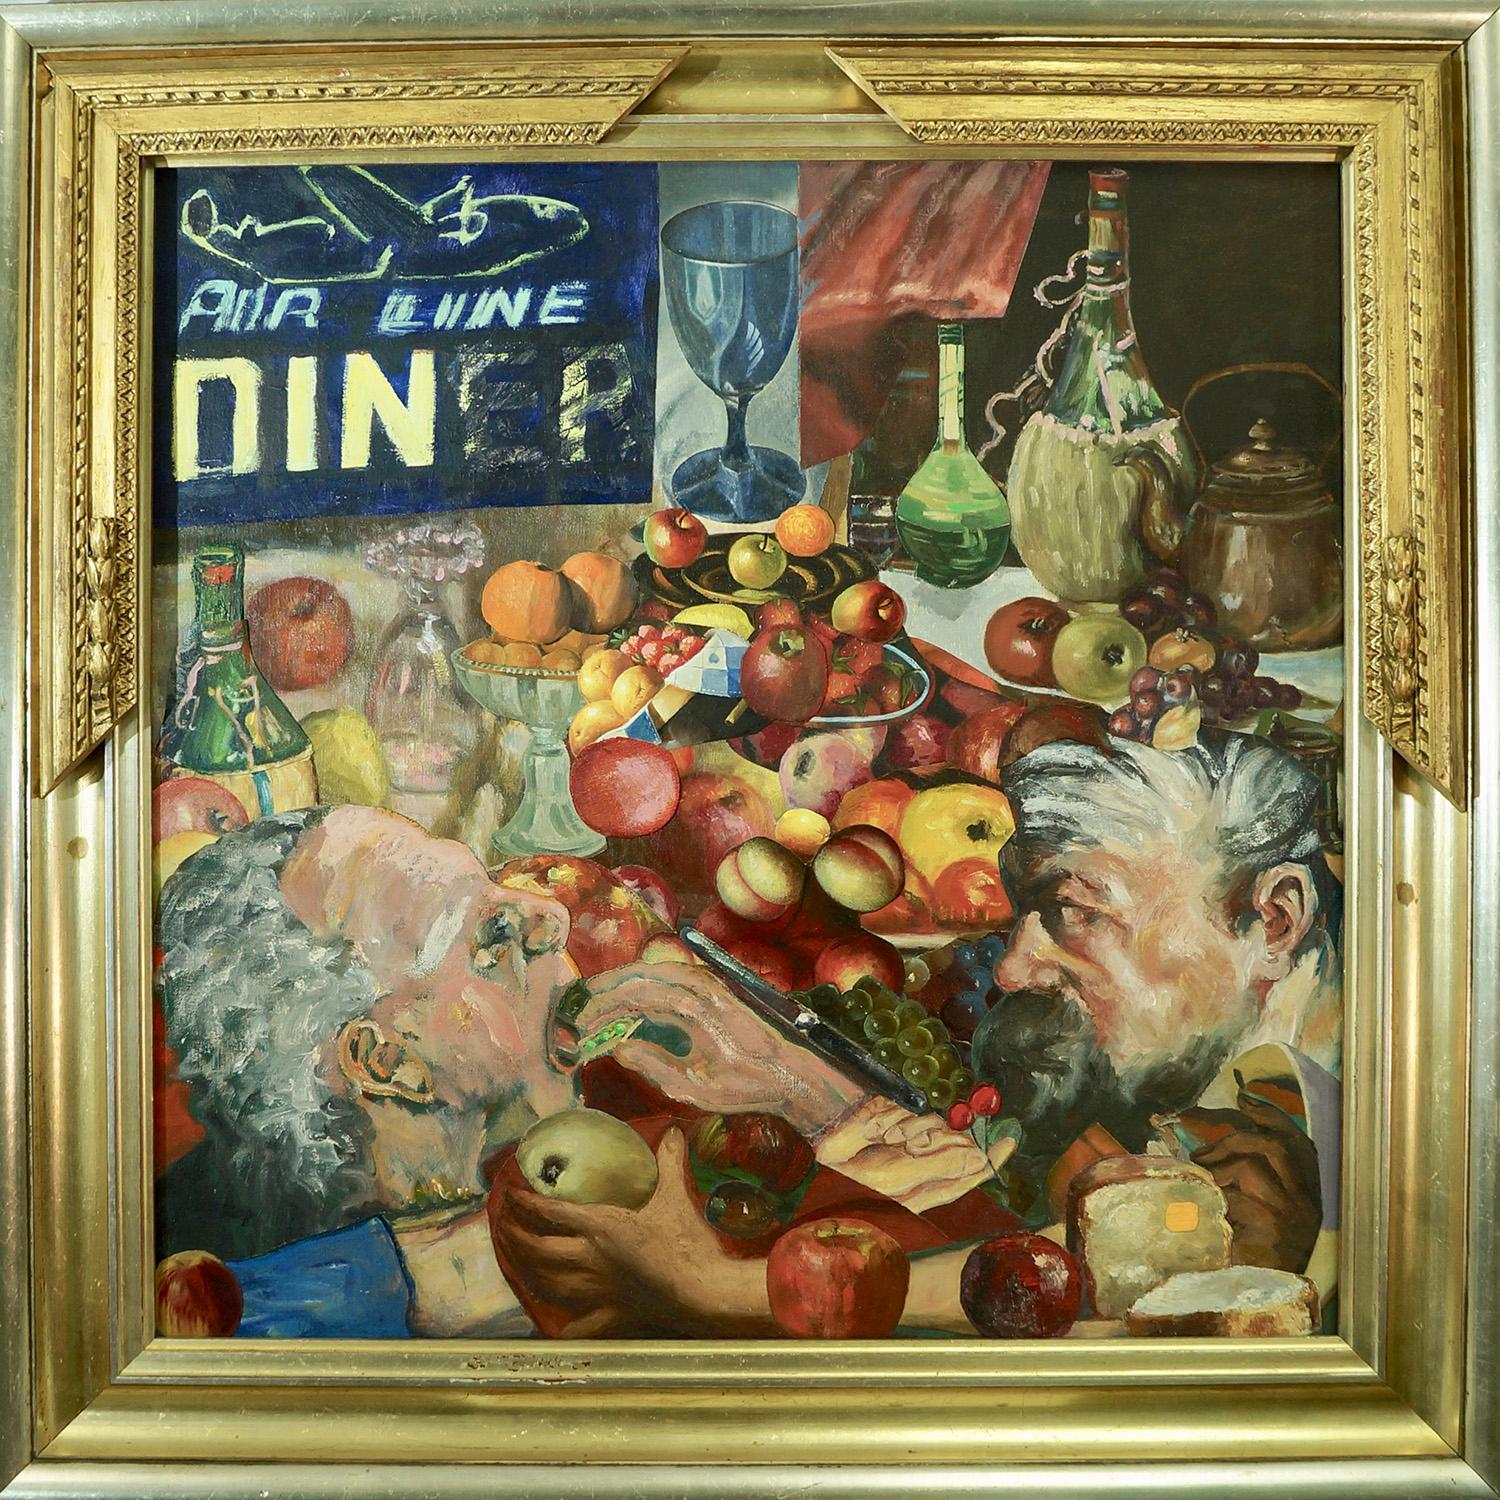 "Eating at the Airline Diner", surrealistisch, rot, blau, gelb, Acrylmalerei – Painting von John Baker